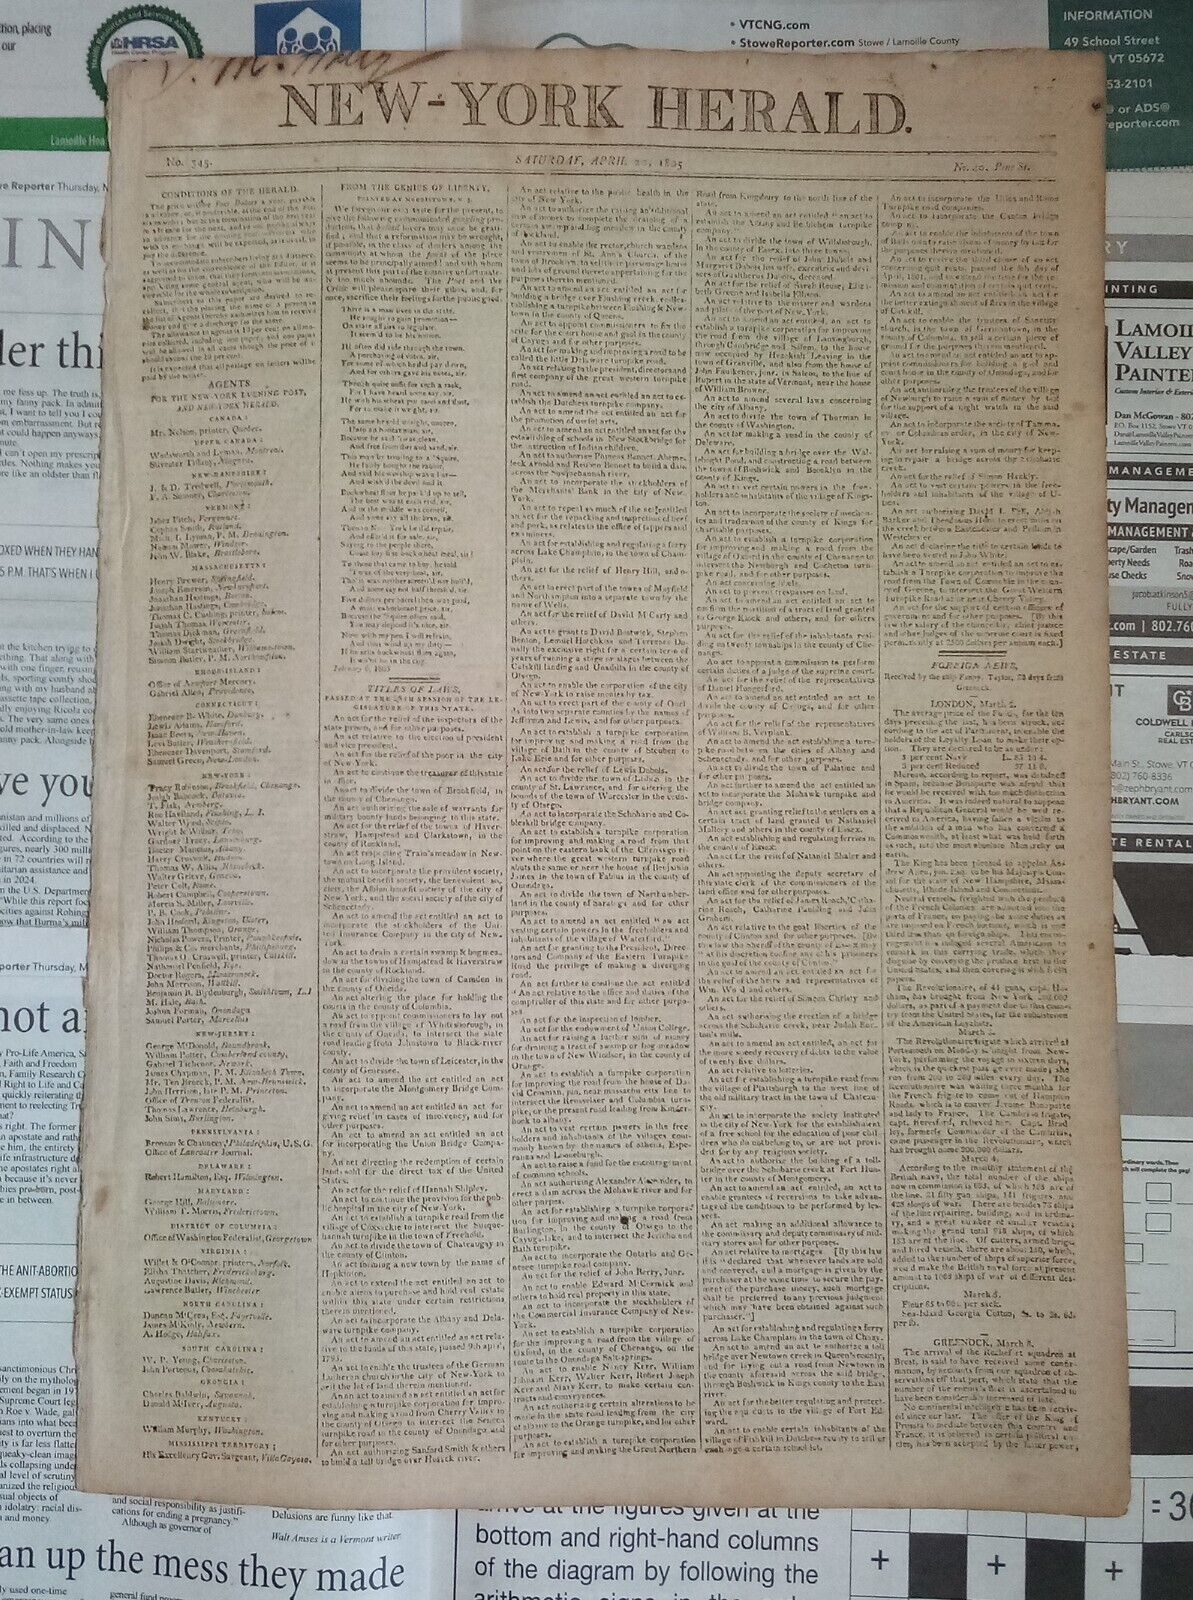 New York Herald - April 20 1805 - Newspaper